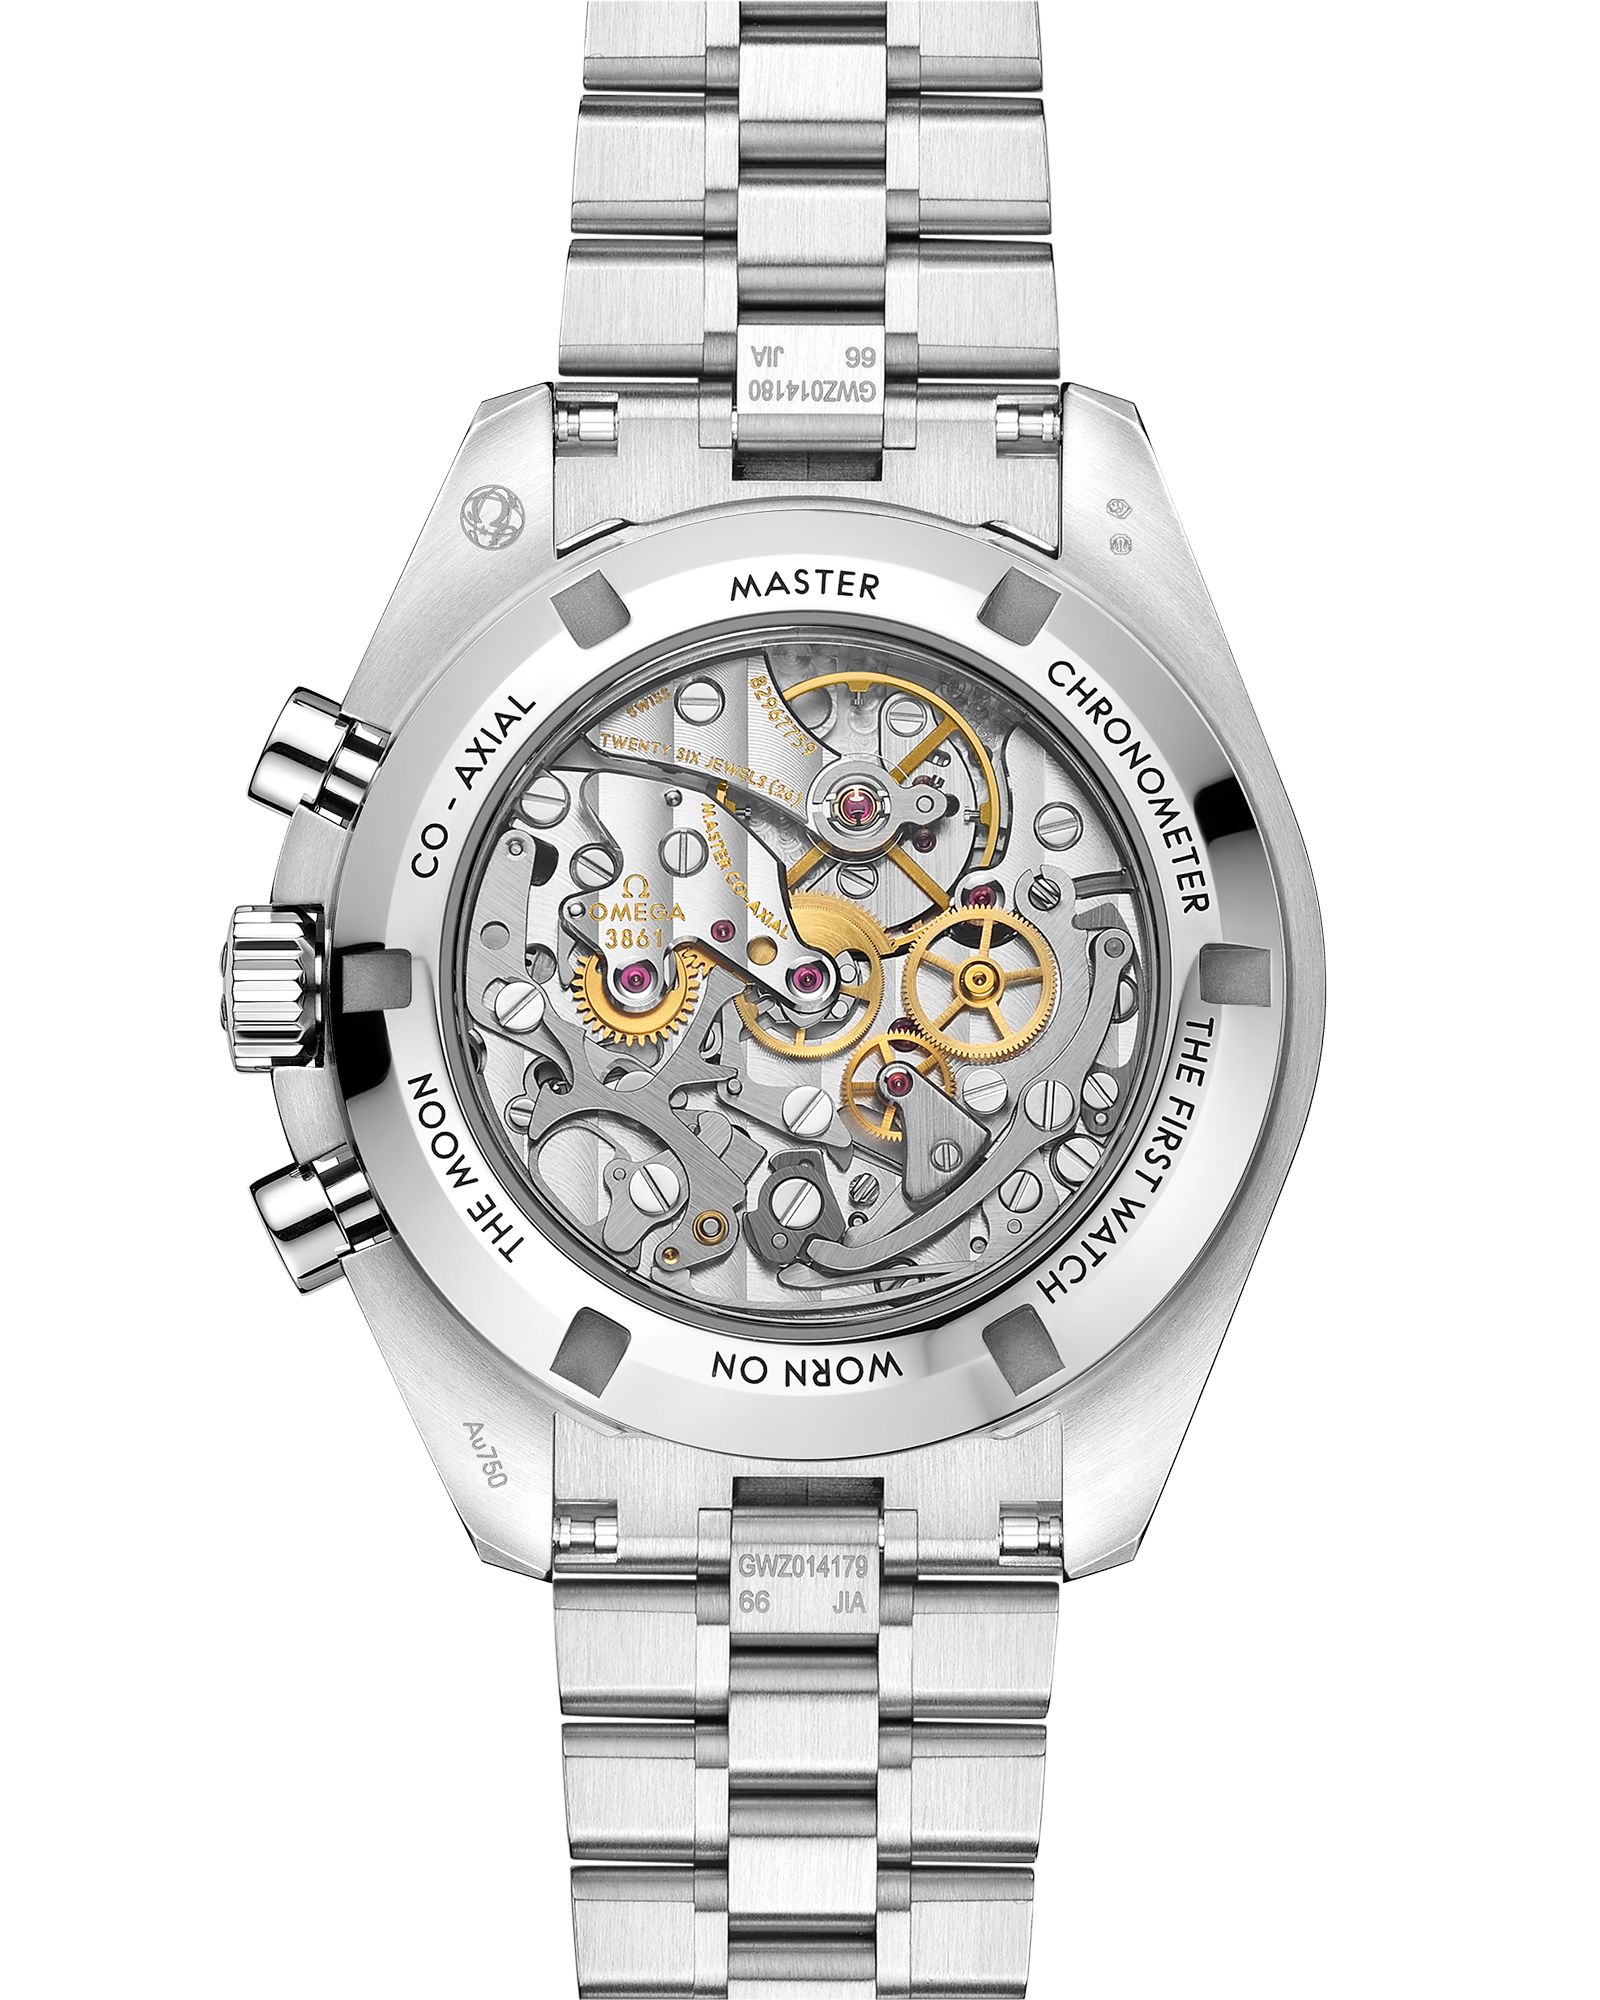 Moonwatch Professional Speedmaster Canopus Gold™ Chronograph Watch 310 ...